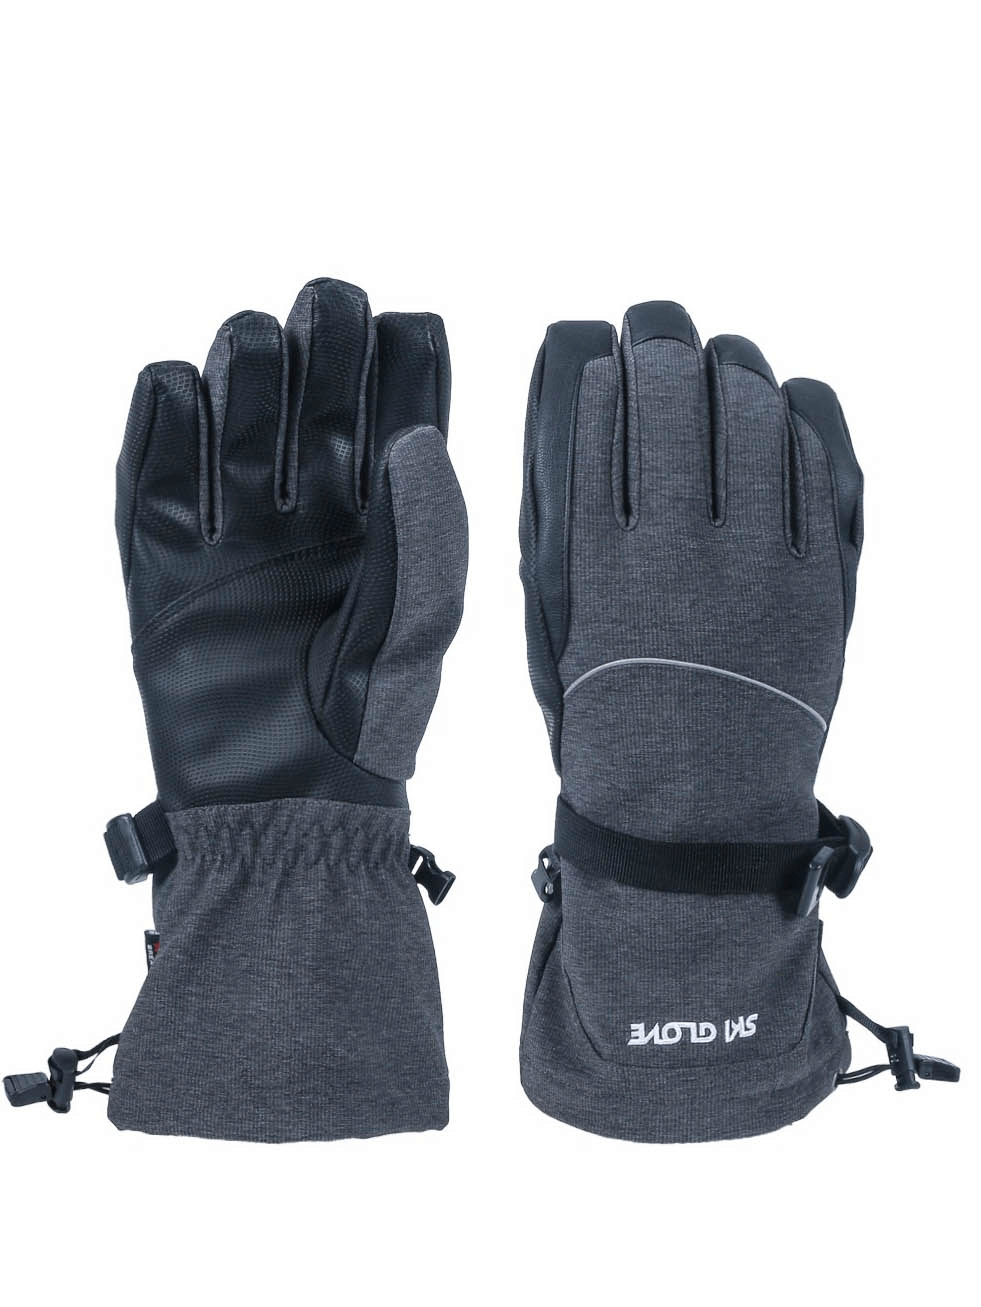 Soft Double Waterproof Design Touchscreen Snow Ski Gloves - SF0612